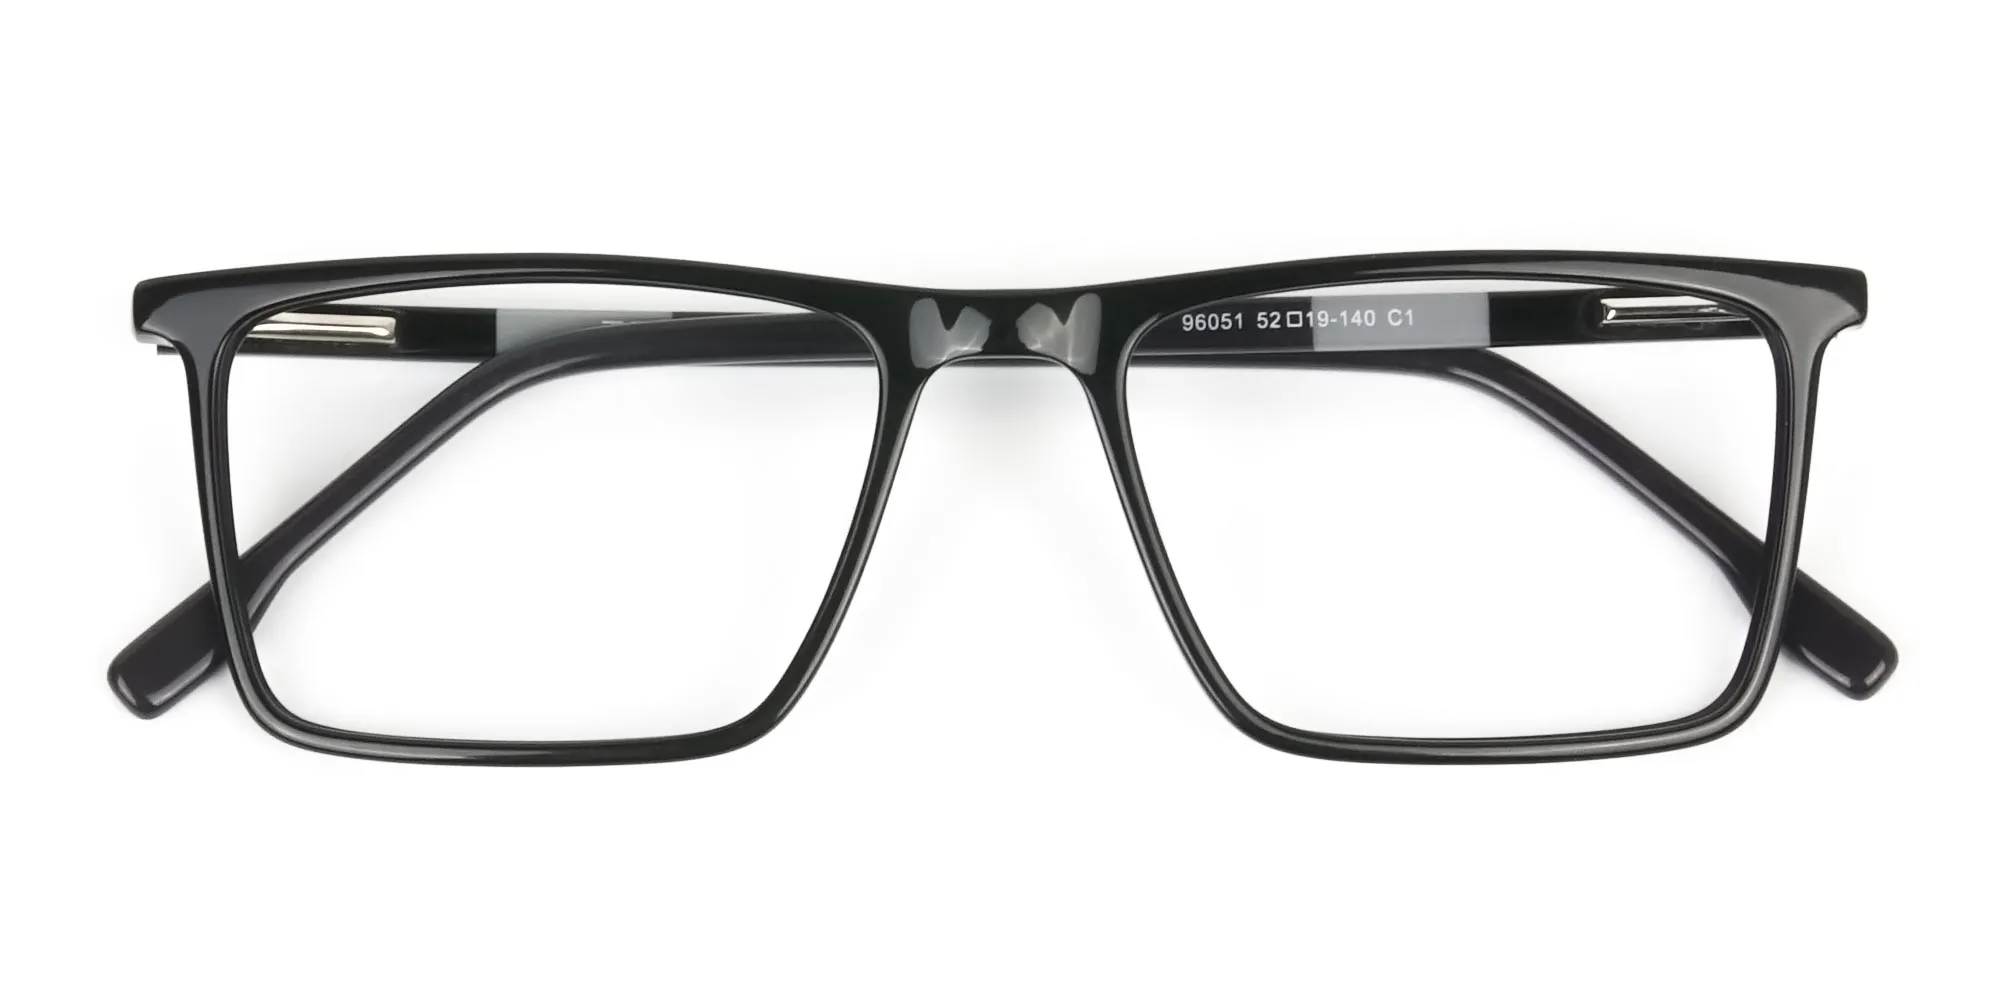 Unisex Black Rectangular Glasses - 2